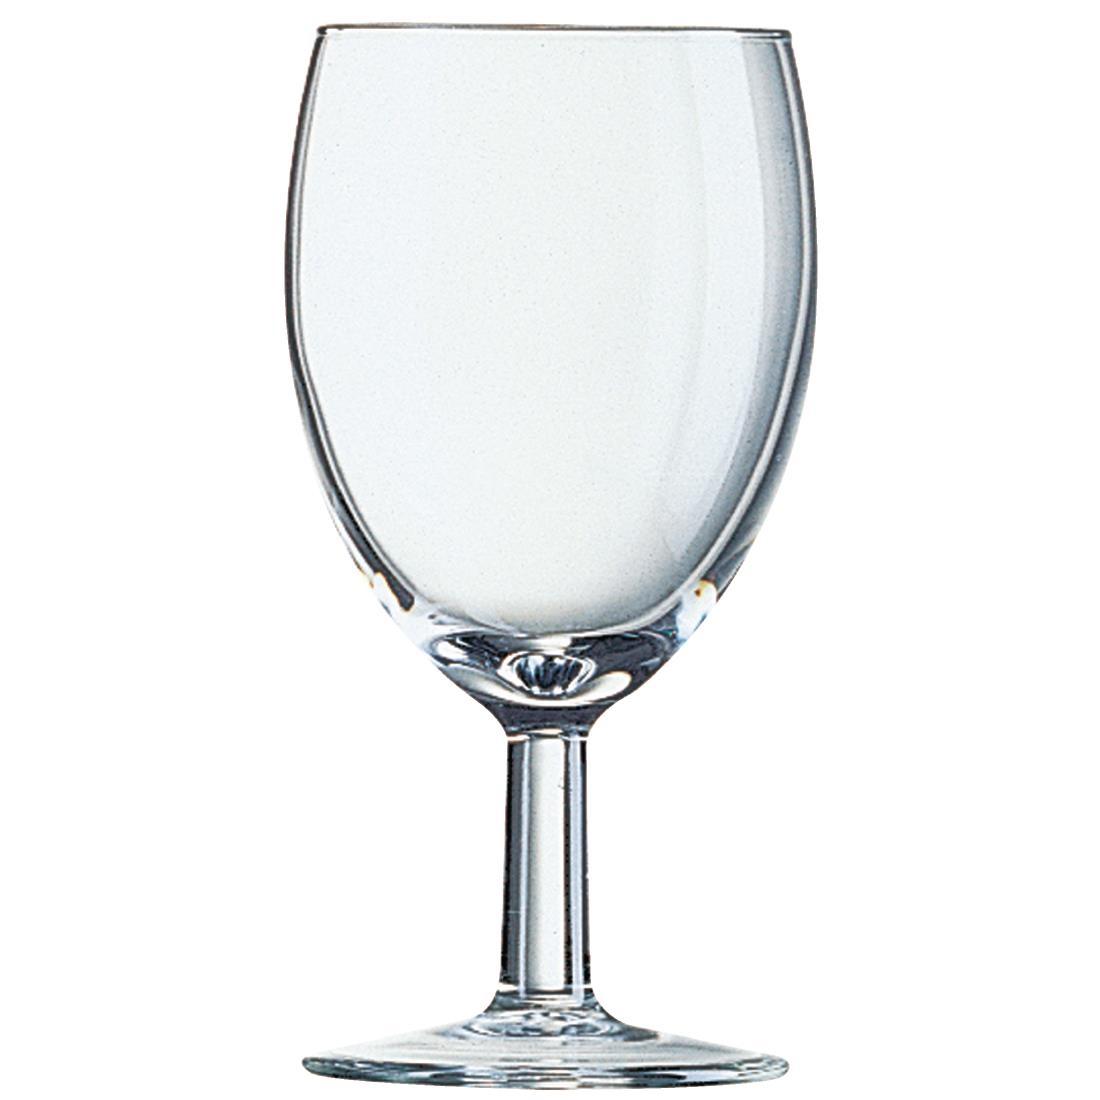 Arcoroc Savoie Wine Glasses 240ml CE Marked at 175ml (Pack of 48) - CJ507  - 1